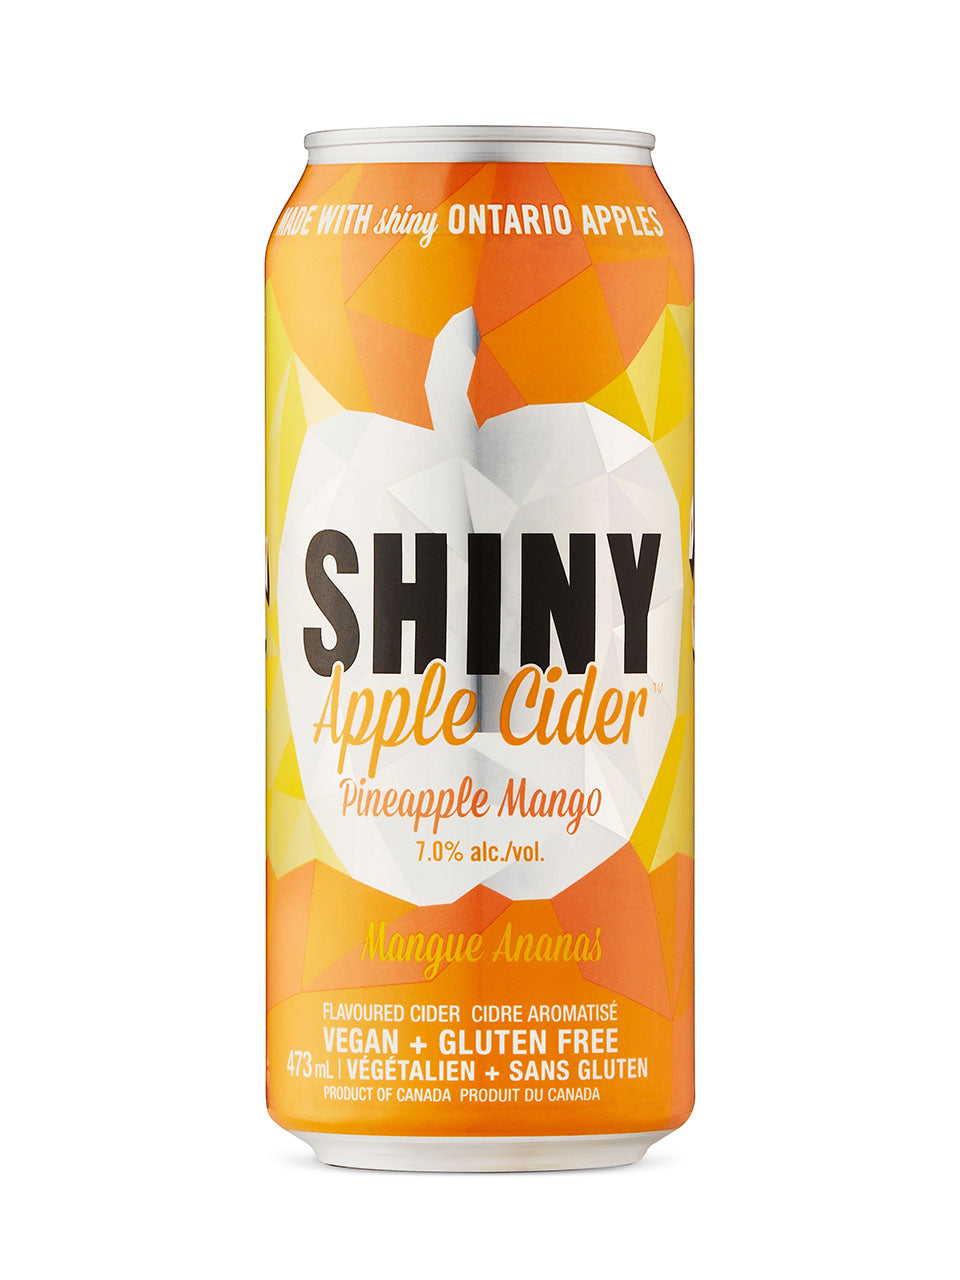 Shiny Apple Pineapple Mango Cider 473 ml can